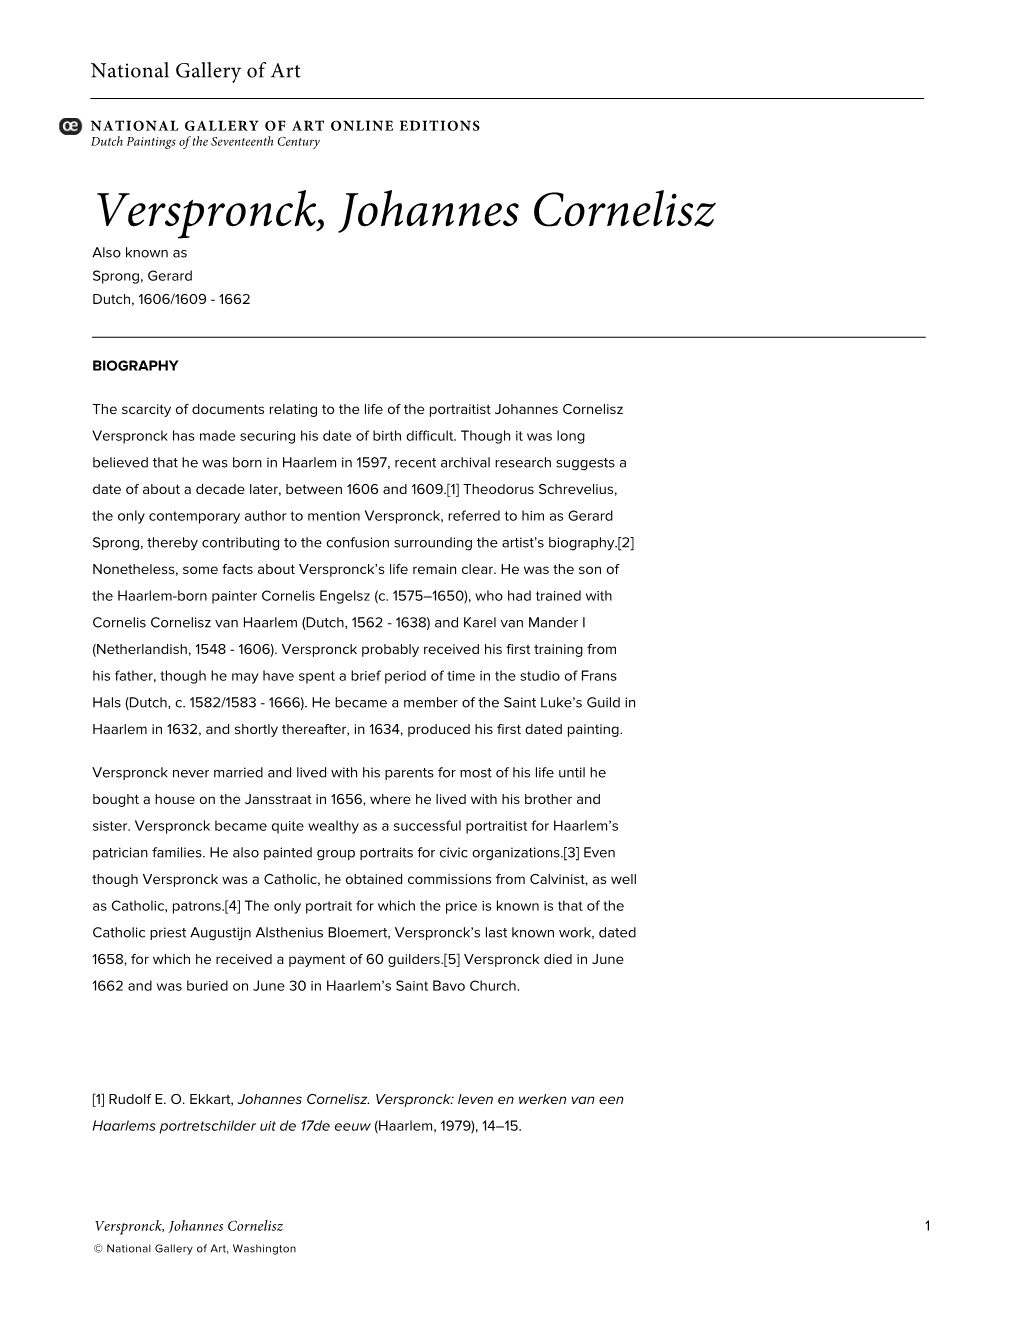 Verspronck, Johannes Cornelisz Also Known As Sprong, Gerard Dutch, 1606/1609 - 1662